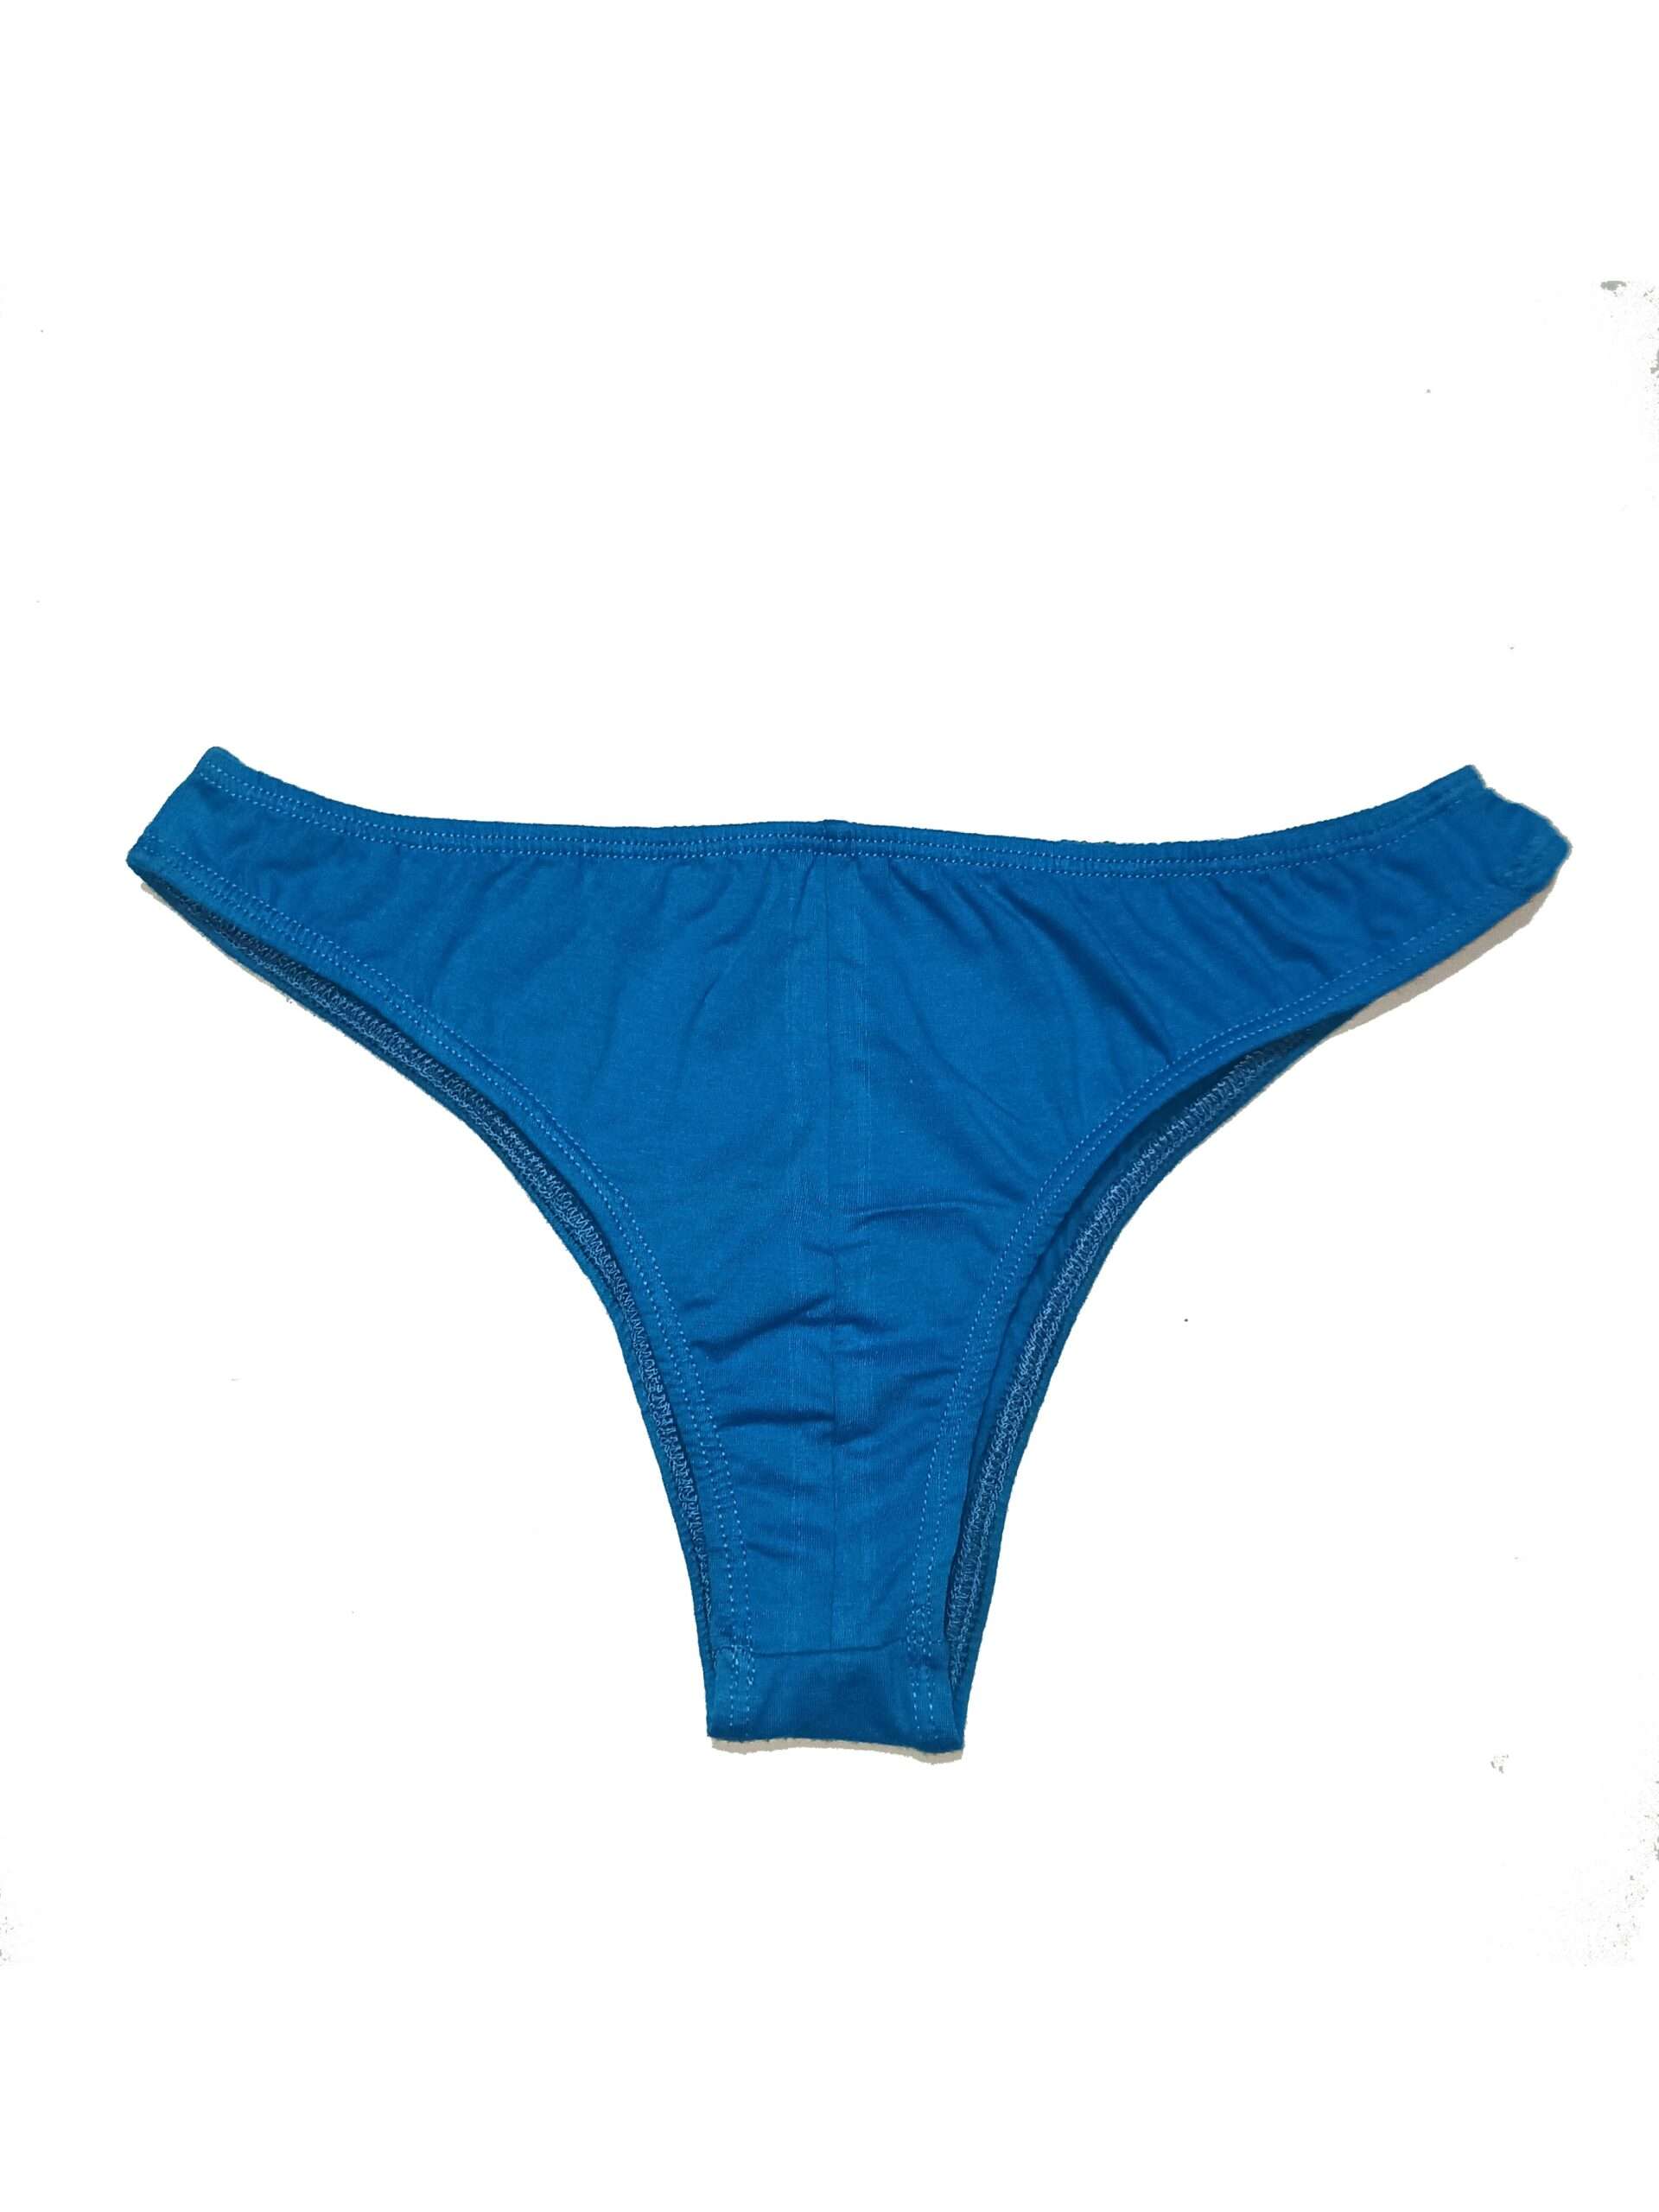 Intimantic low Rise Soft Cotton String Panty Blue 95% Cotton 5